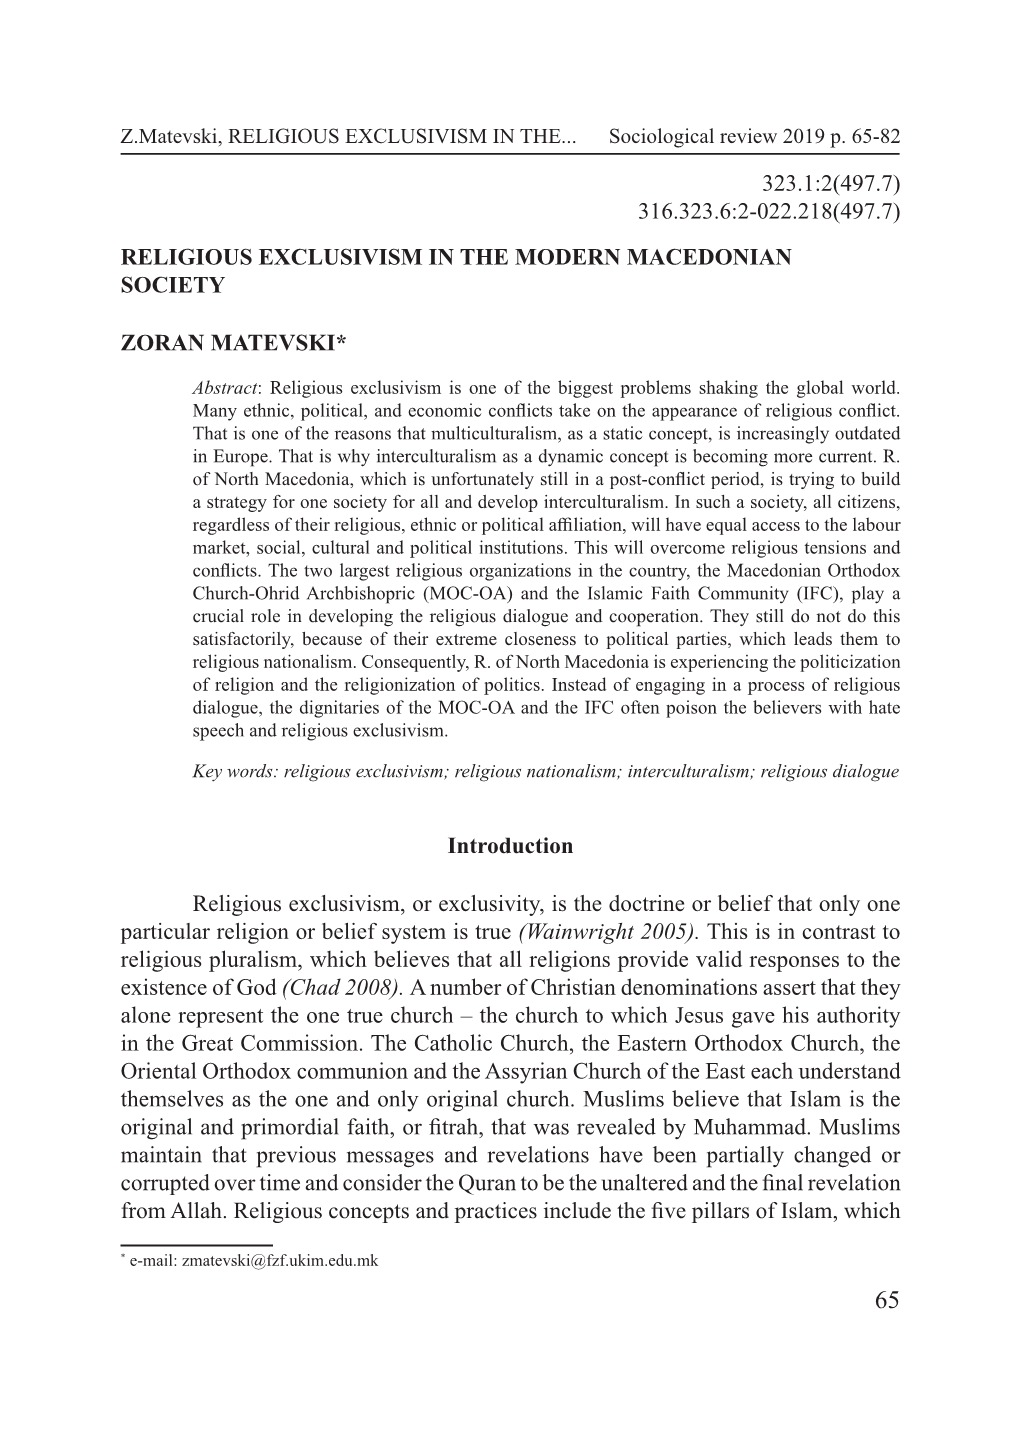 Religious Exclusivism in the Modern Macedonian Society Zoran Matevski